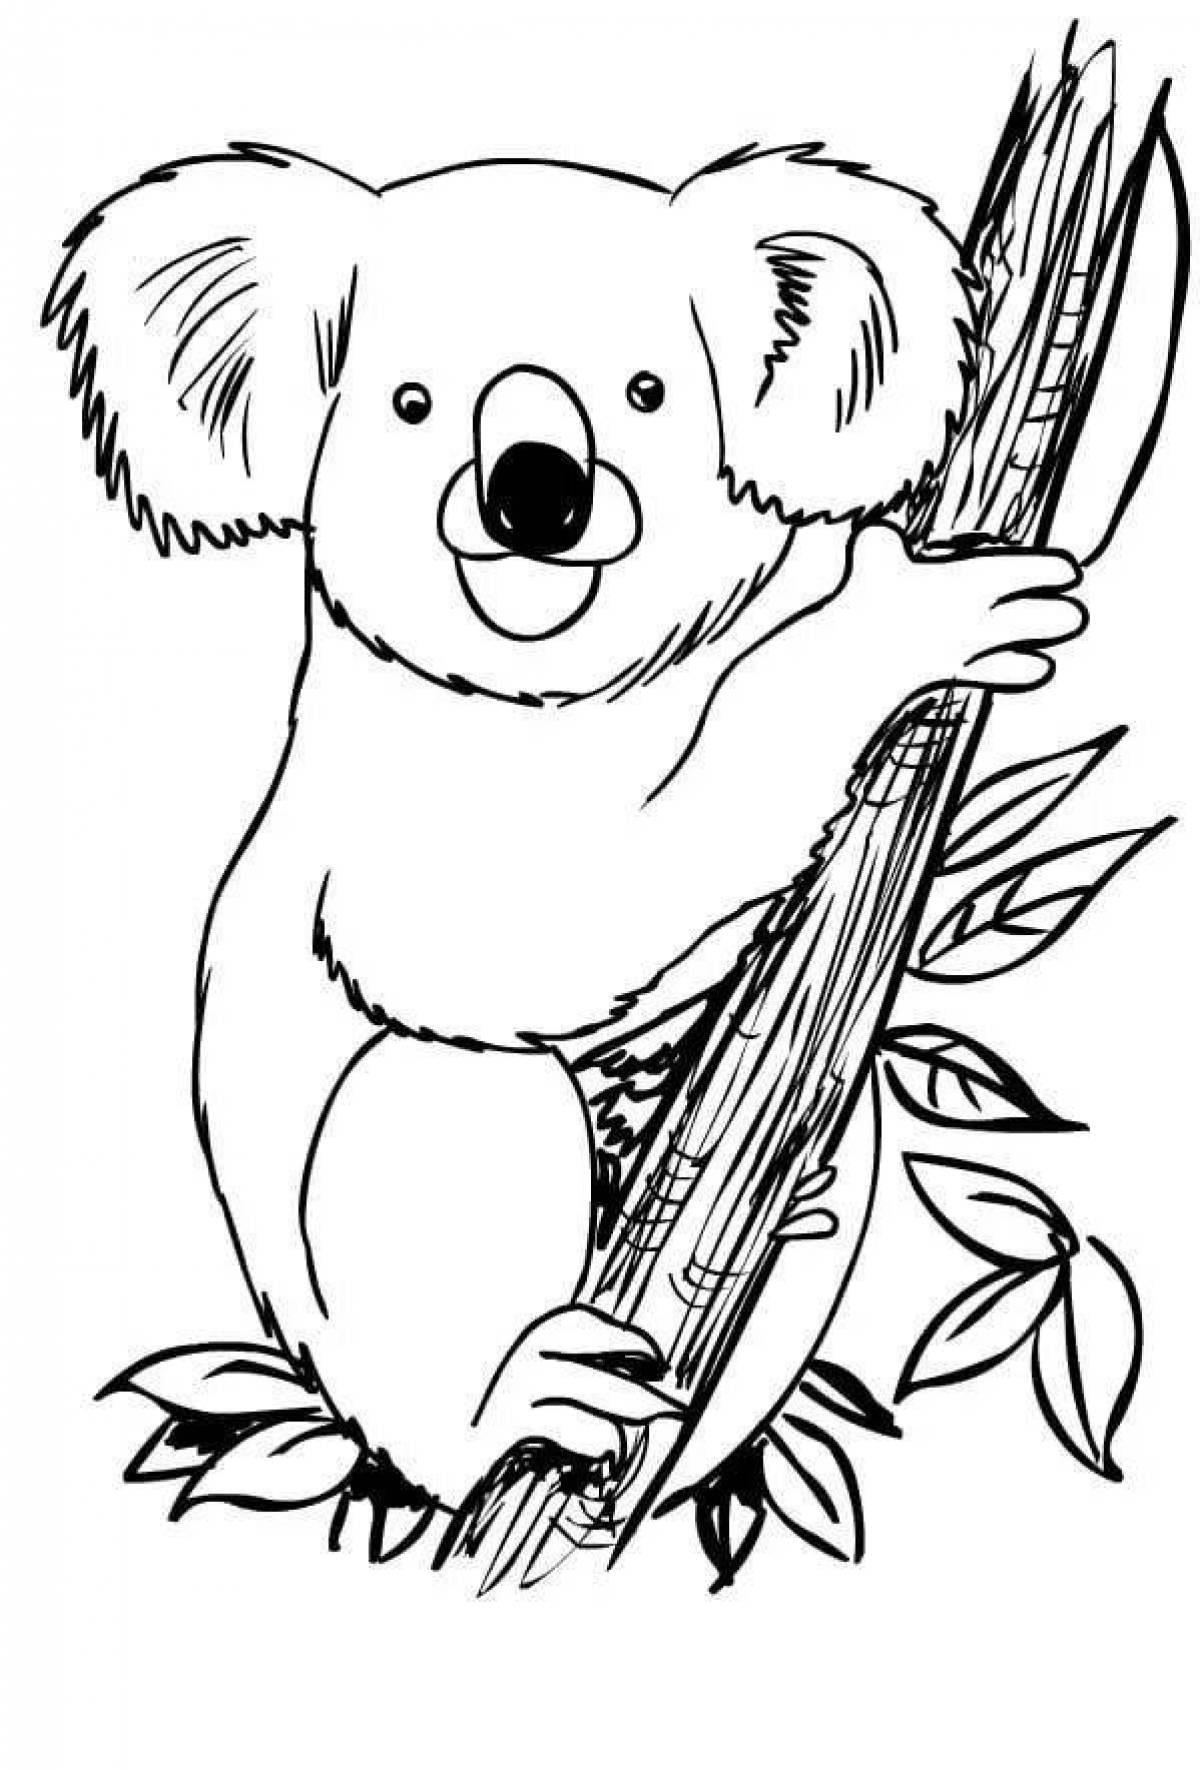 Дружная раскраска коала для детей